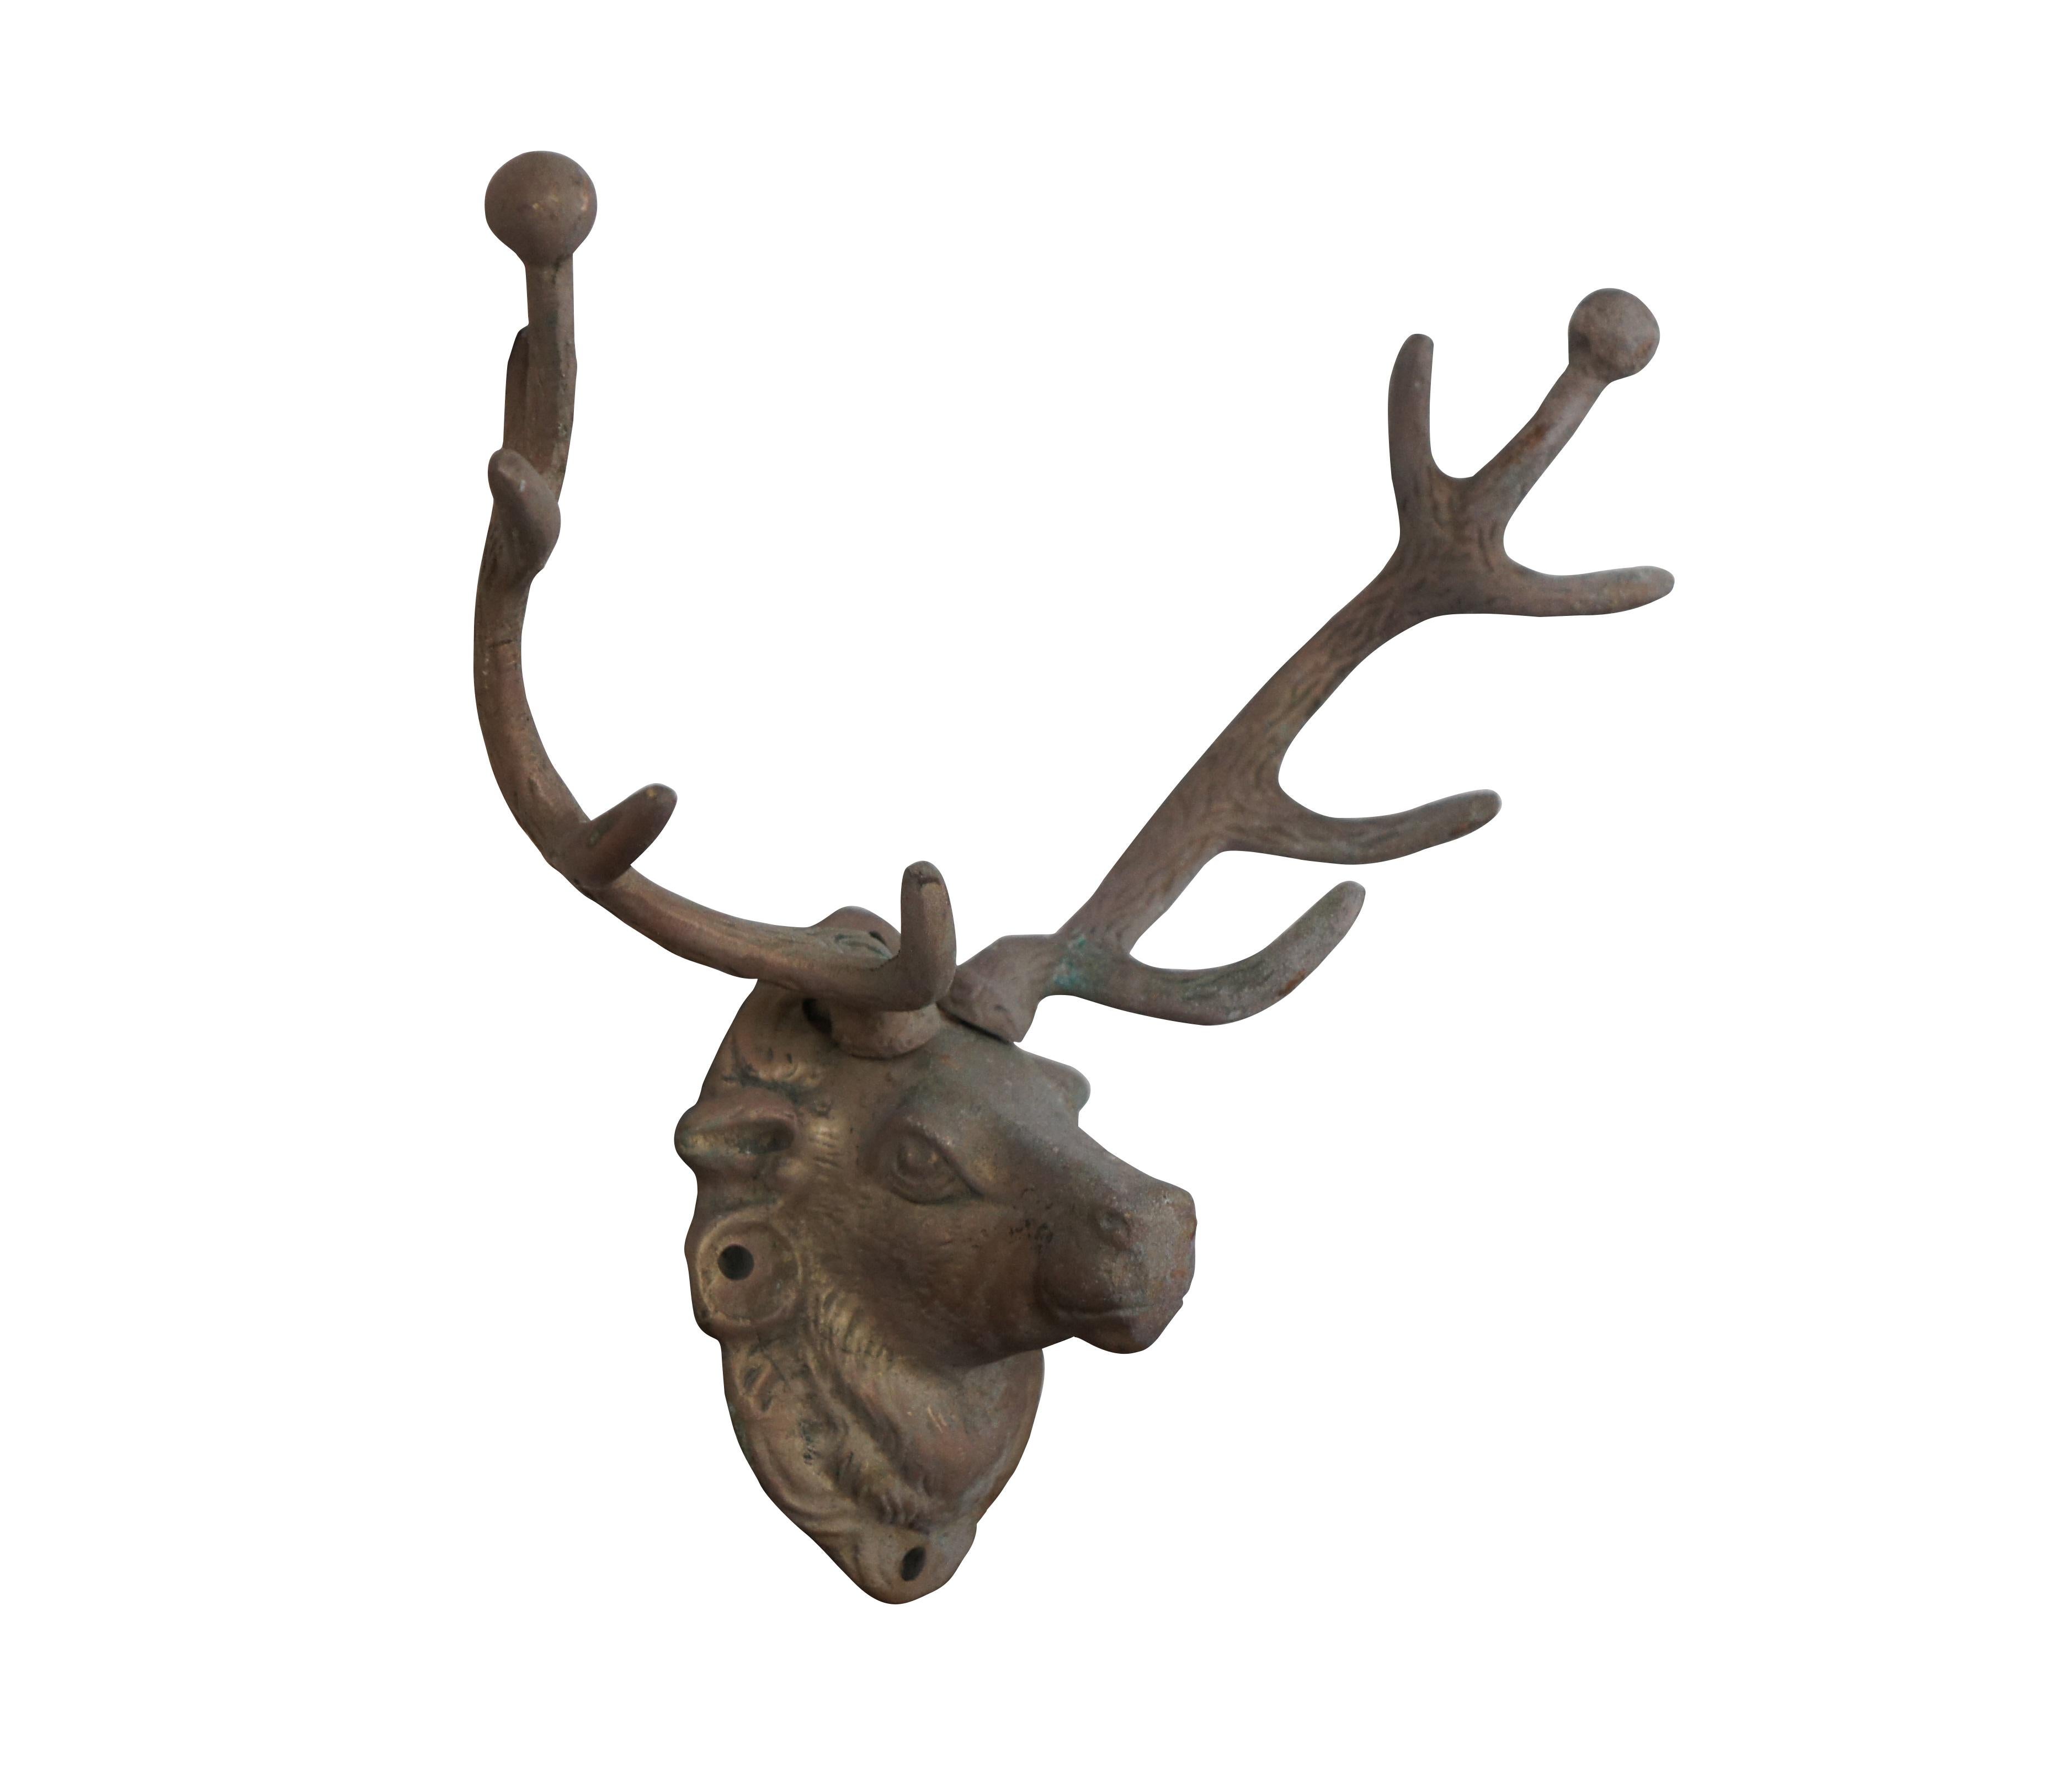 Vintage large cast brass hunt theme hat / coat hook or key rack in the shape of a mounted deer / elk / stag / reindeer with ten point antlers.

Dimensions:
9.5